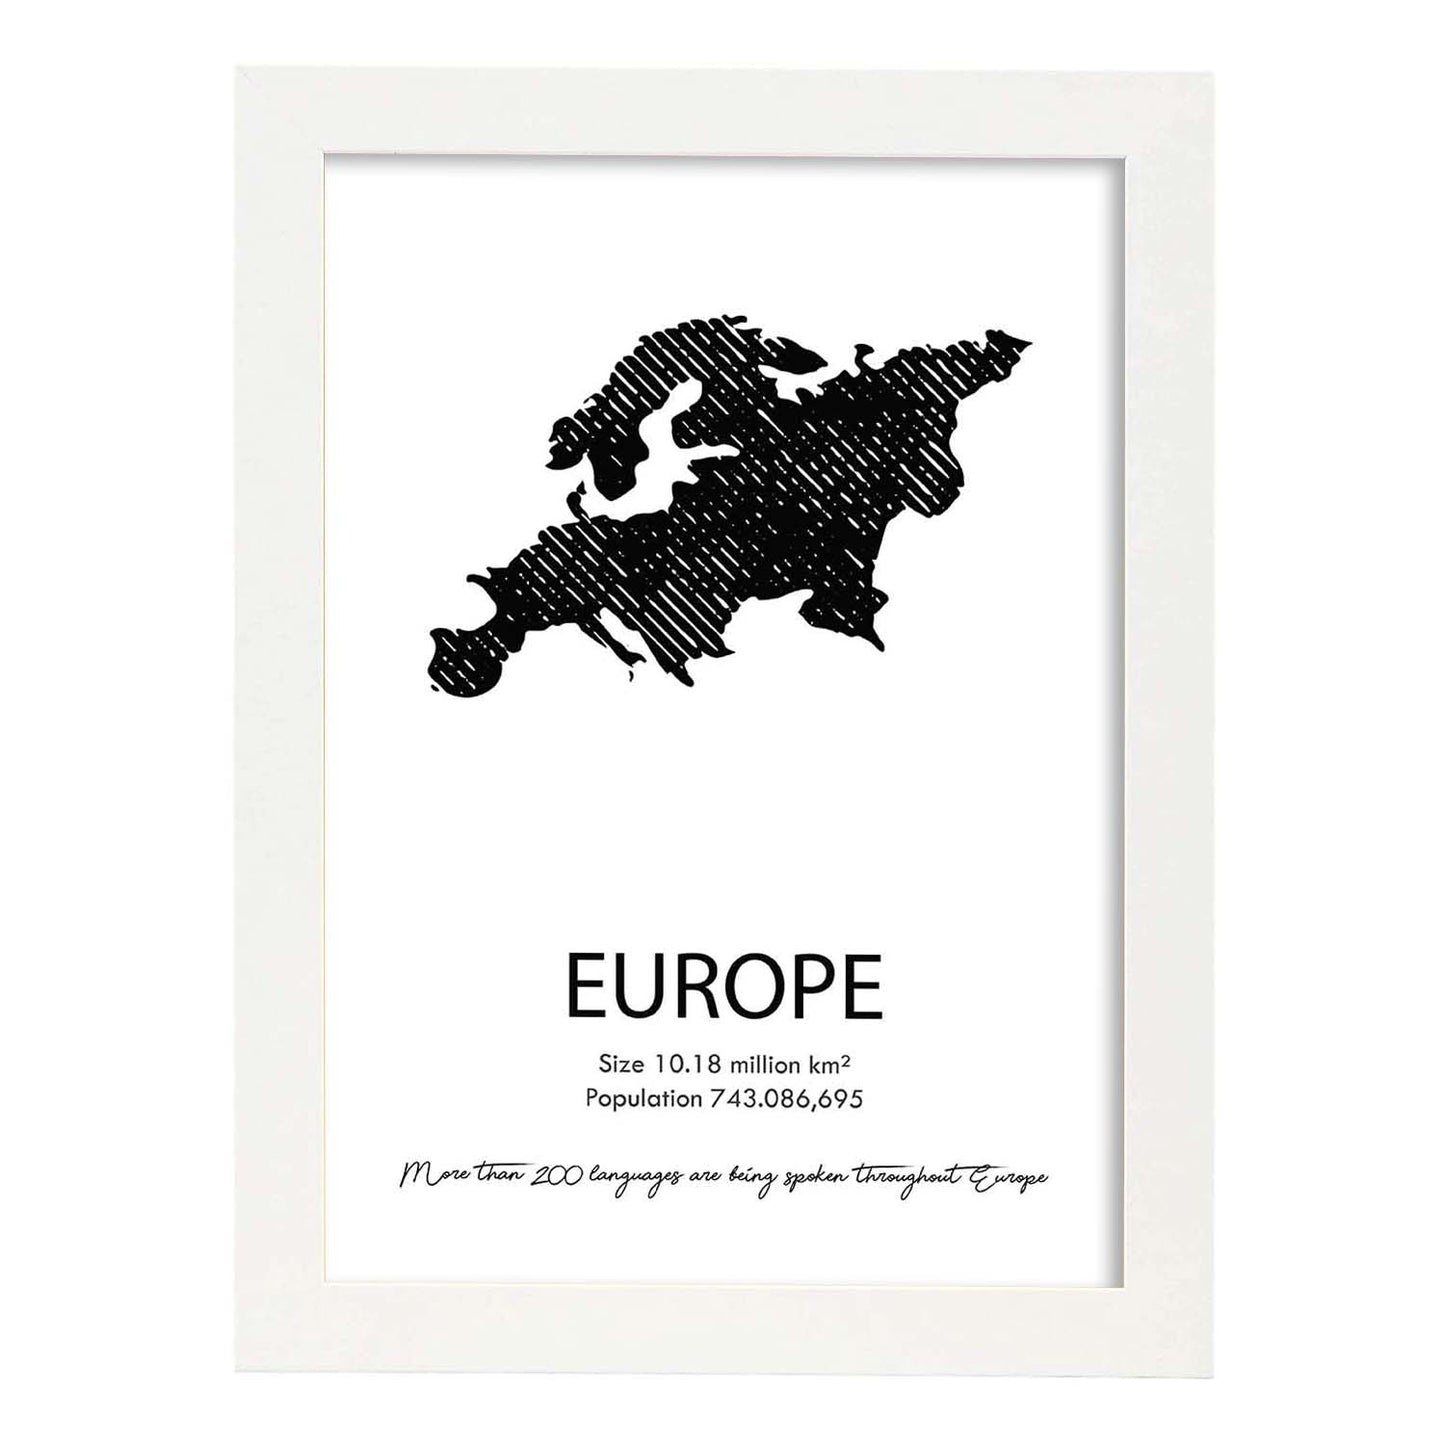 Poster de Europe. Láminas de paises y continentes del mundo.-Artwork-Nacnic-A3-Marco Blanco-Nacnic Estudio SL